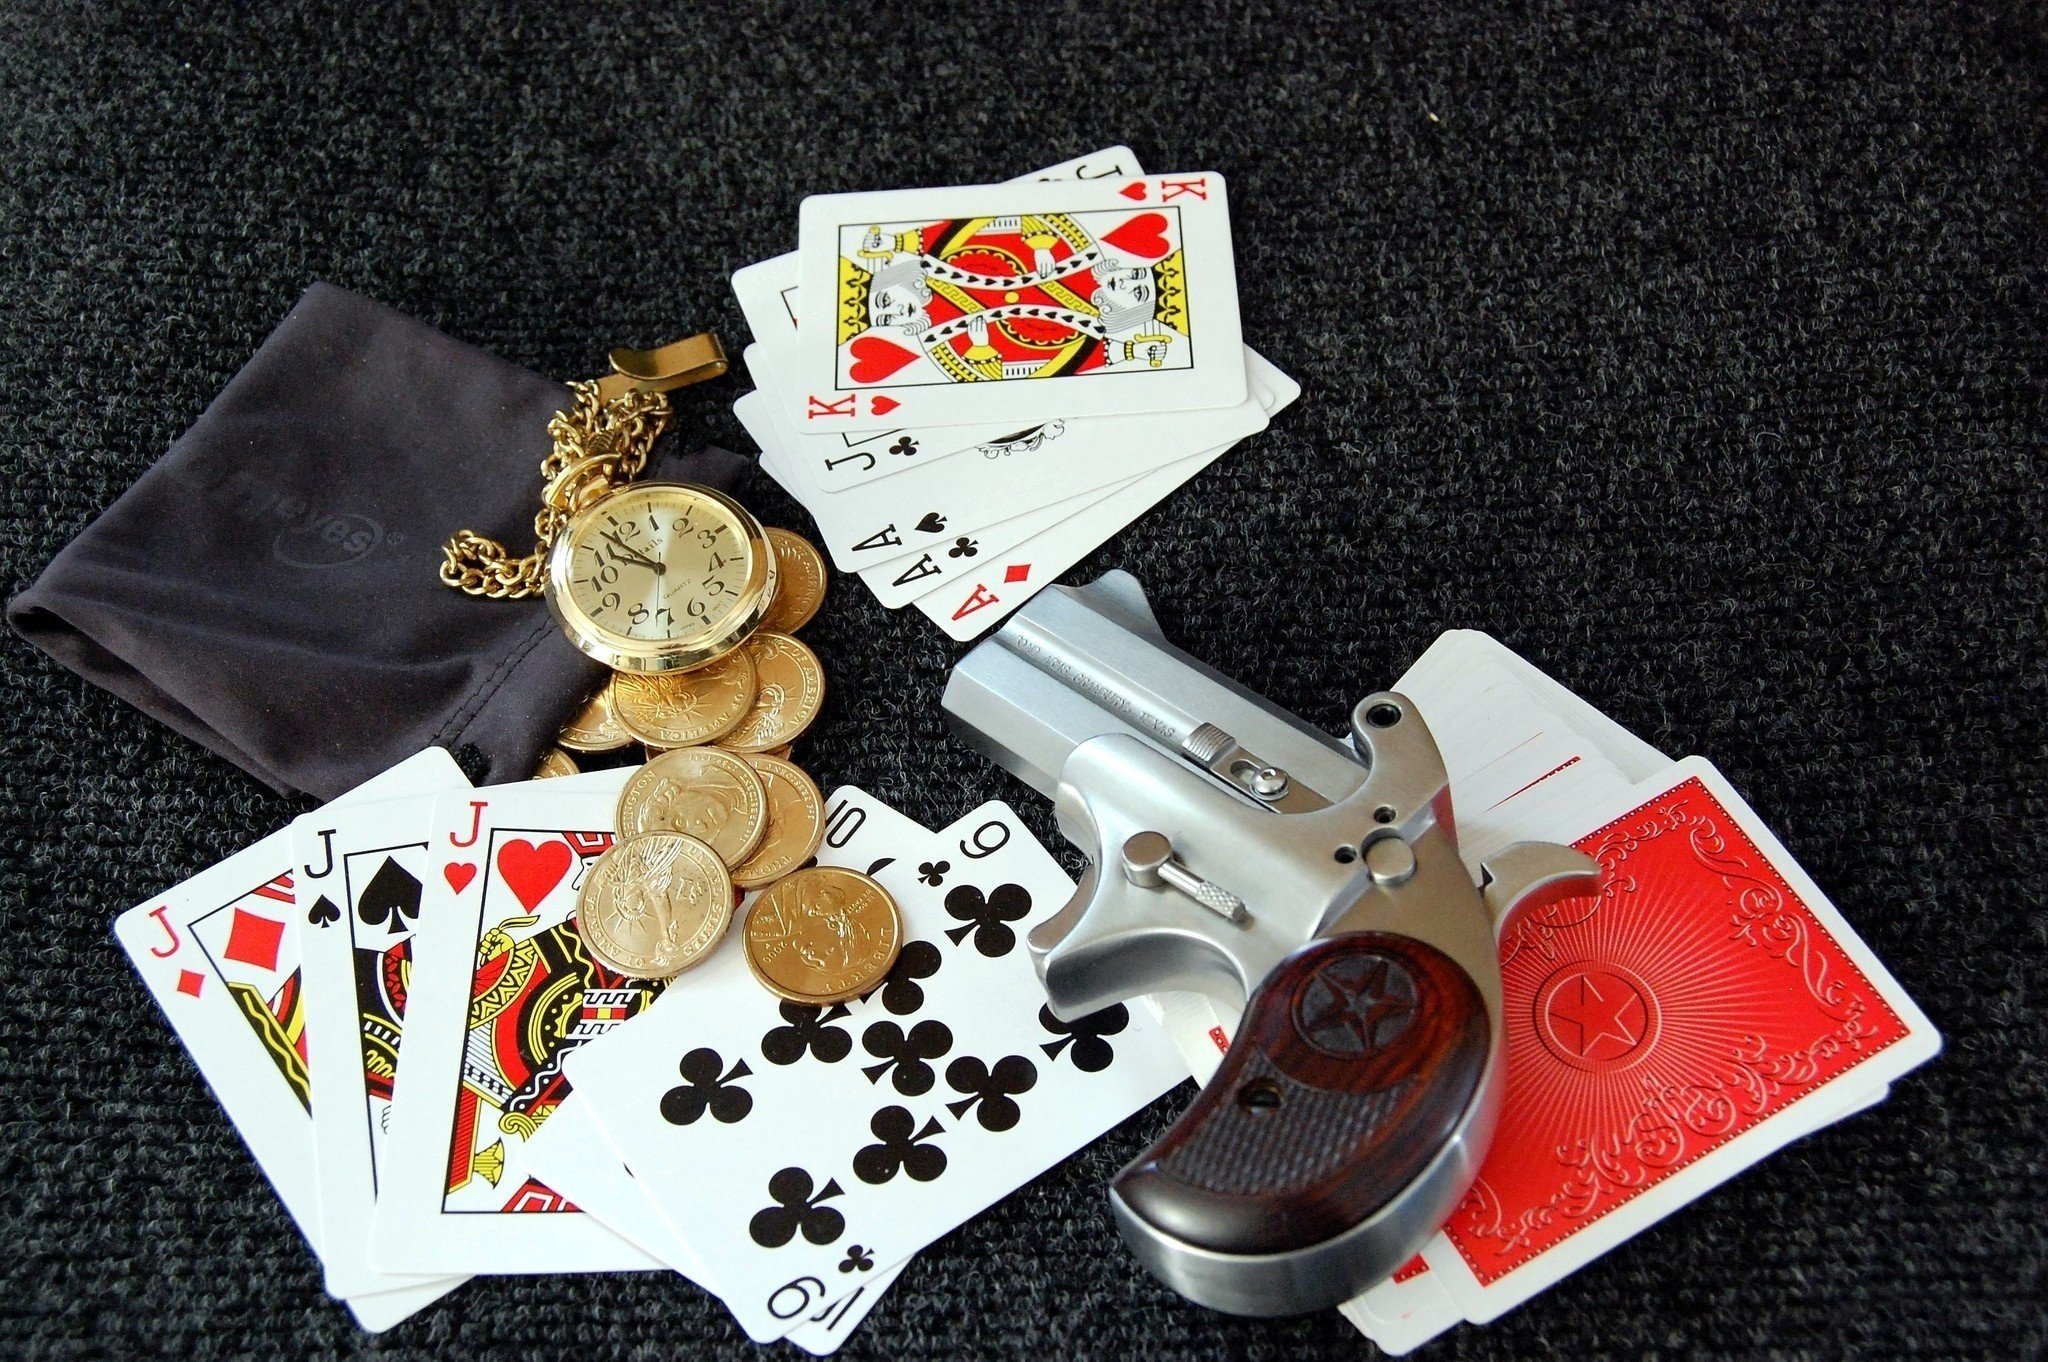 Игра в карточки на деньги. Деньги на карте. Игральные карты на столе.